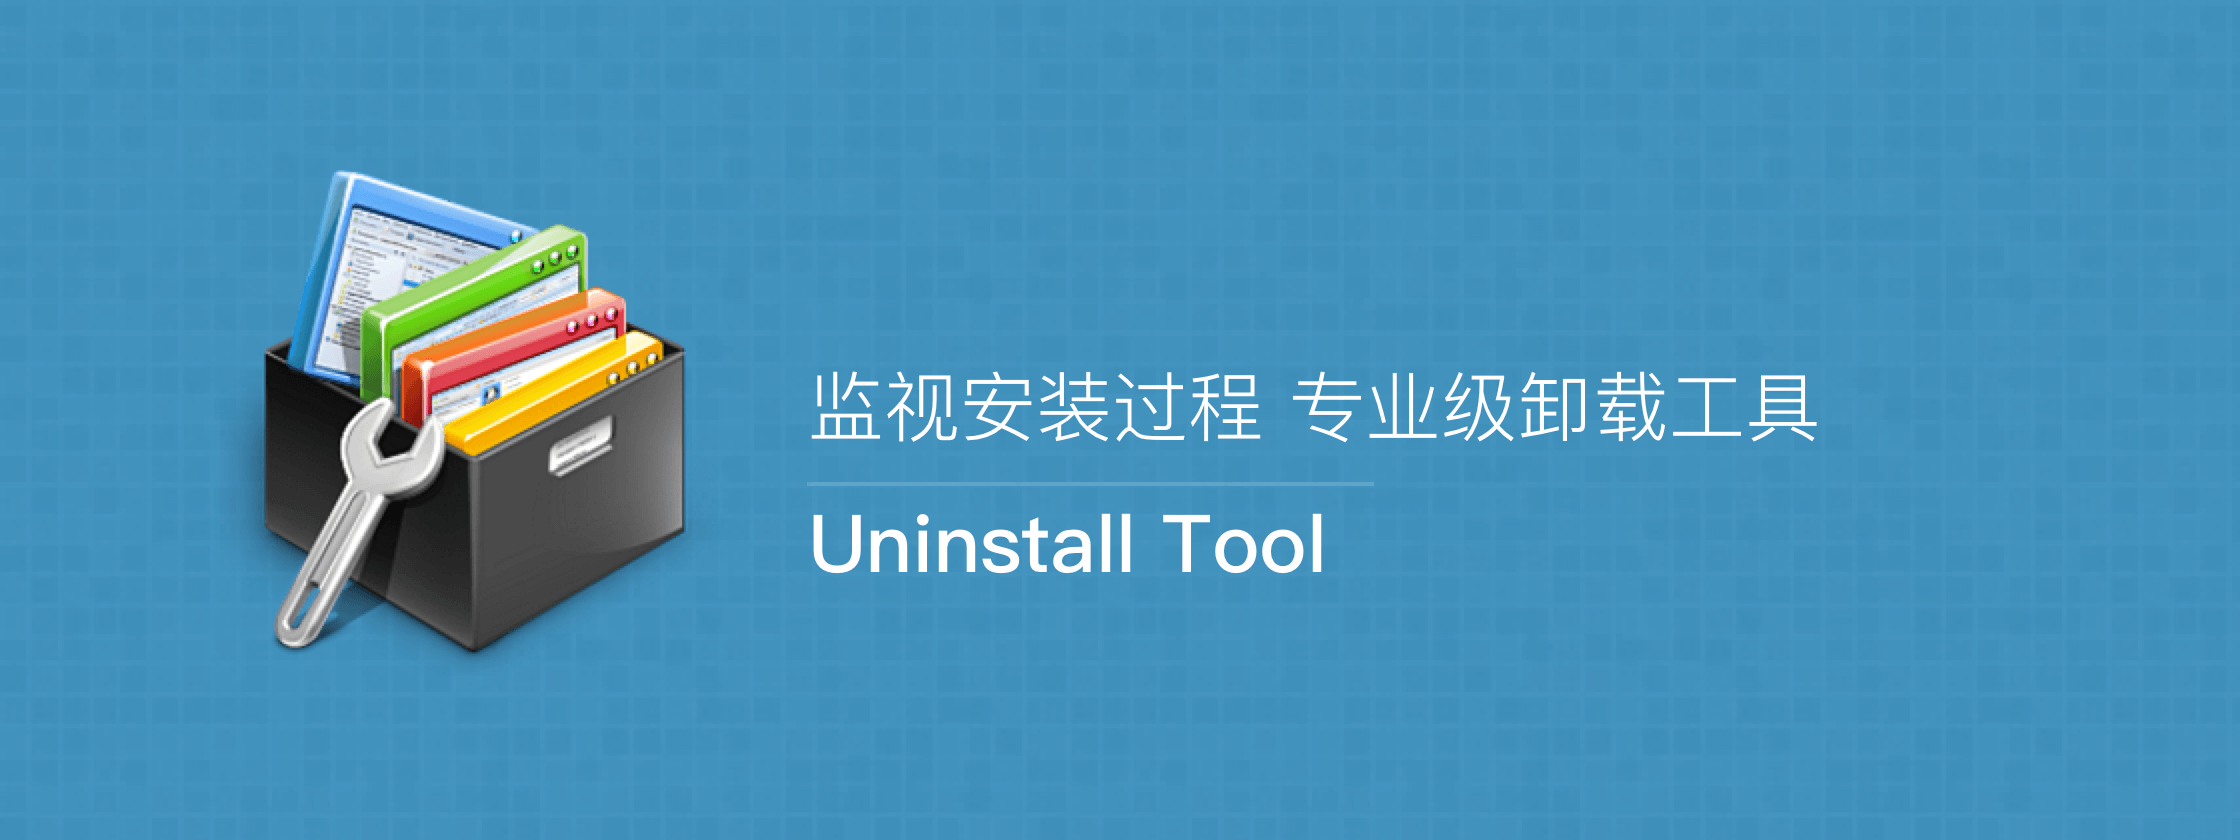 Uninstall Tool – 监视安装过程 专业级卸载工具